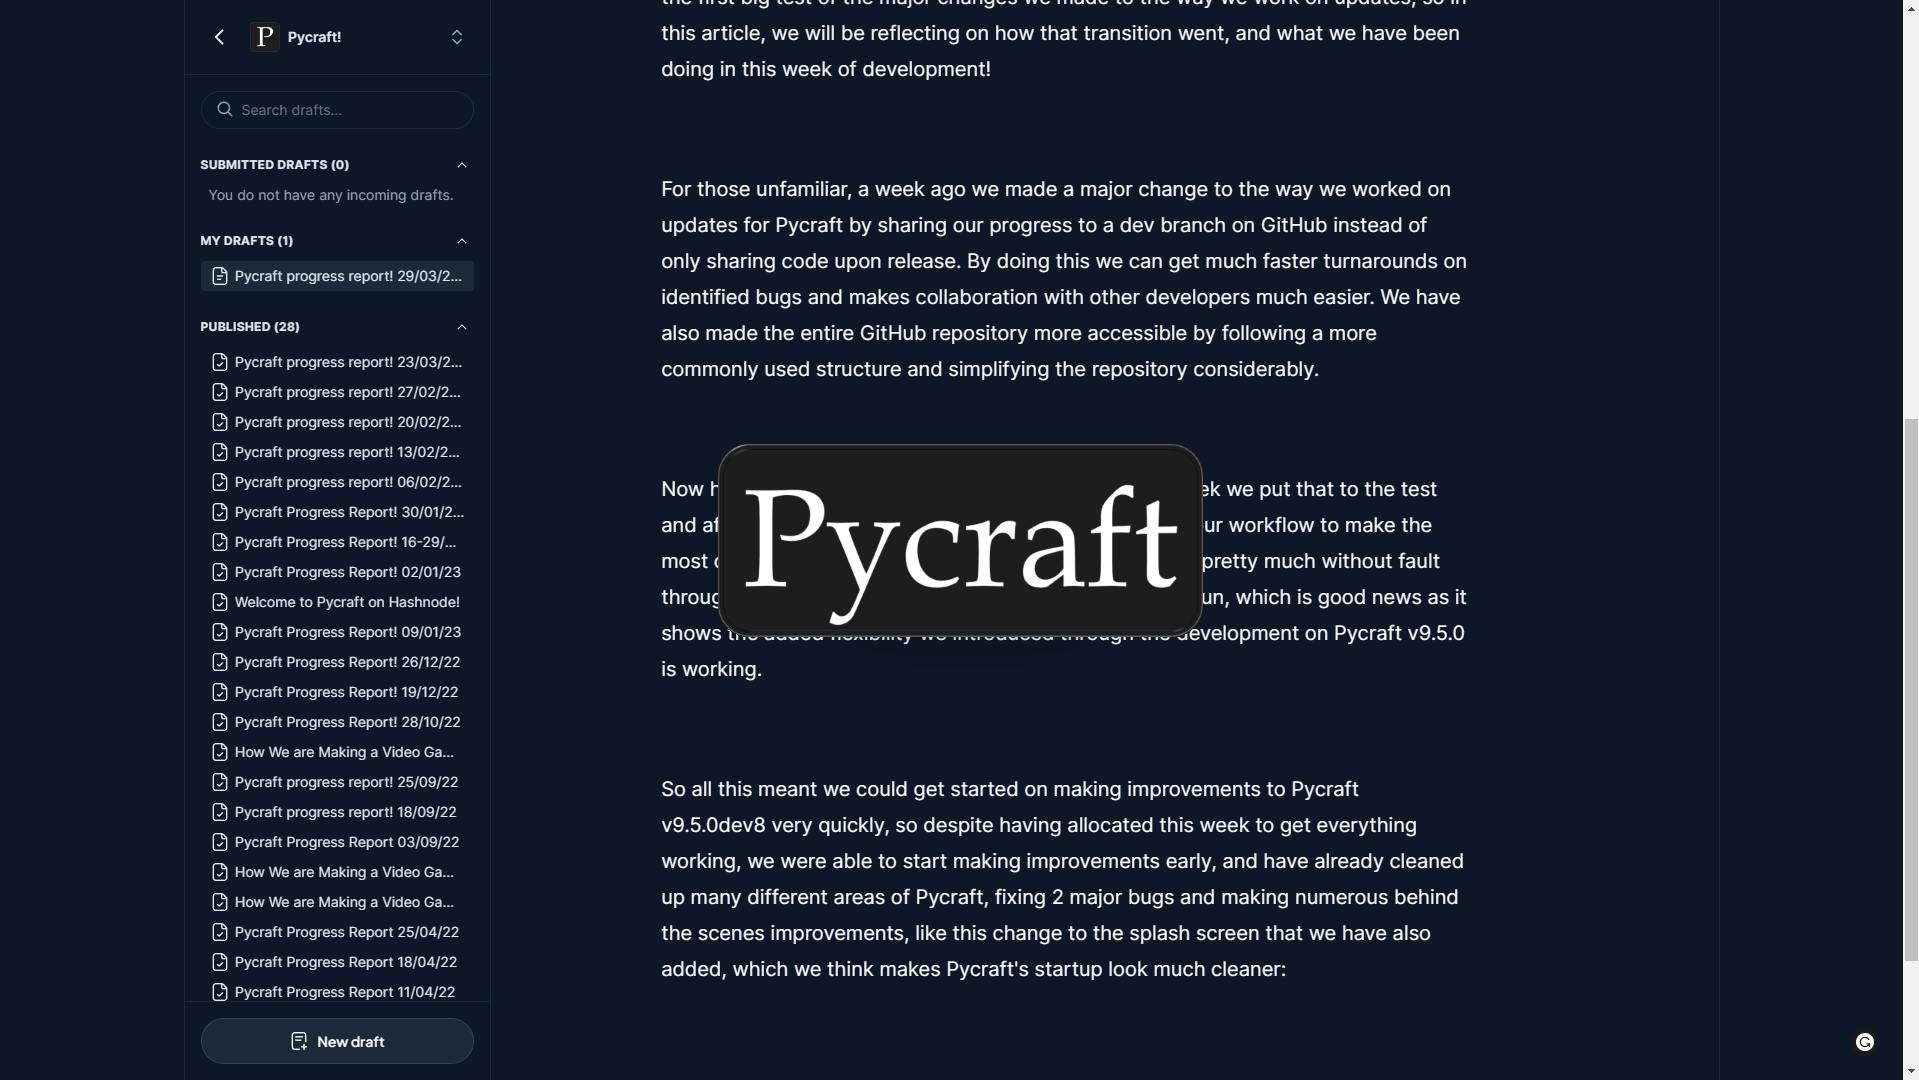 Pycraft's new splash screen